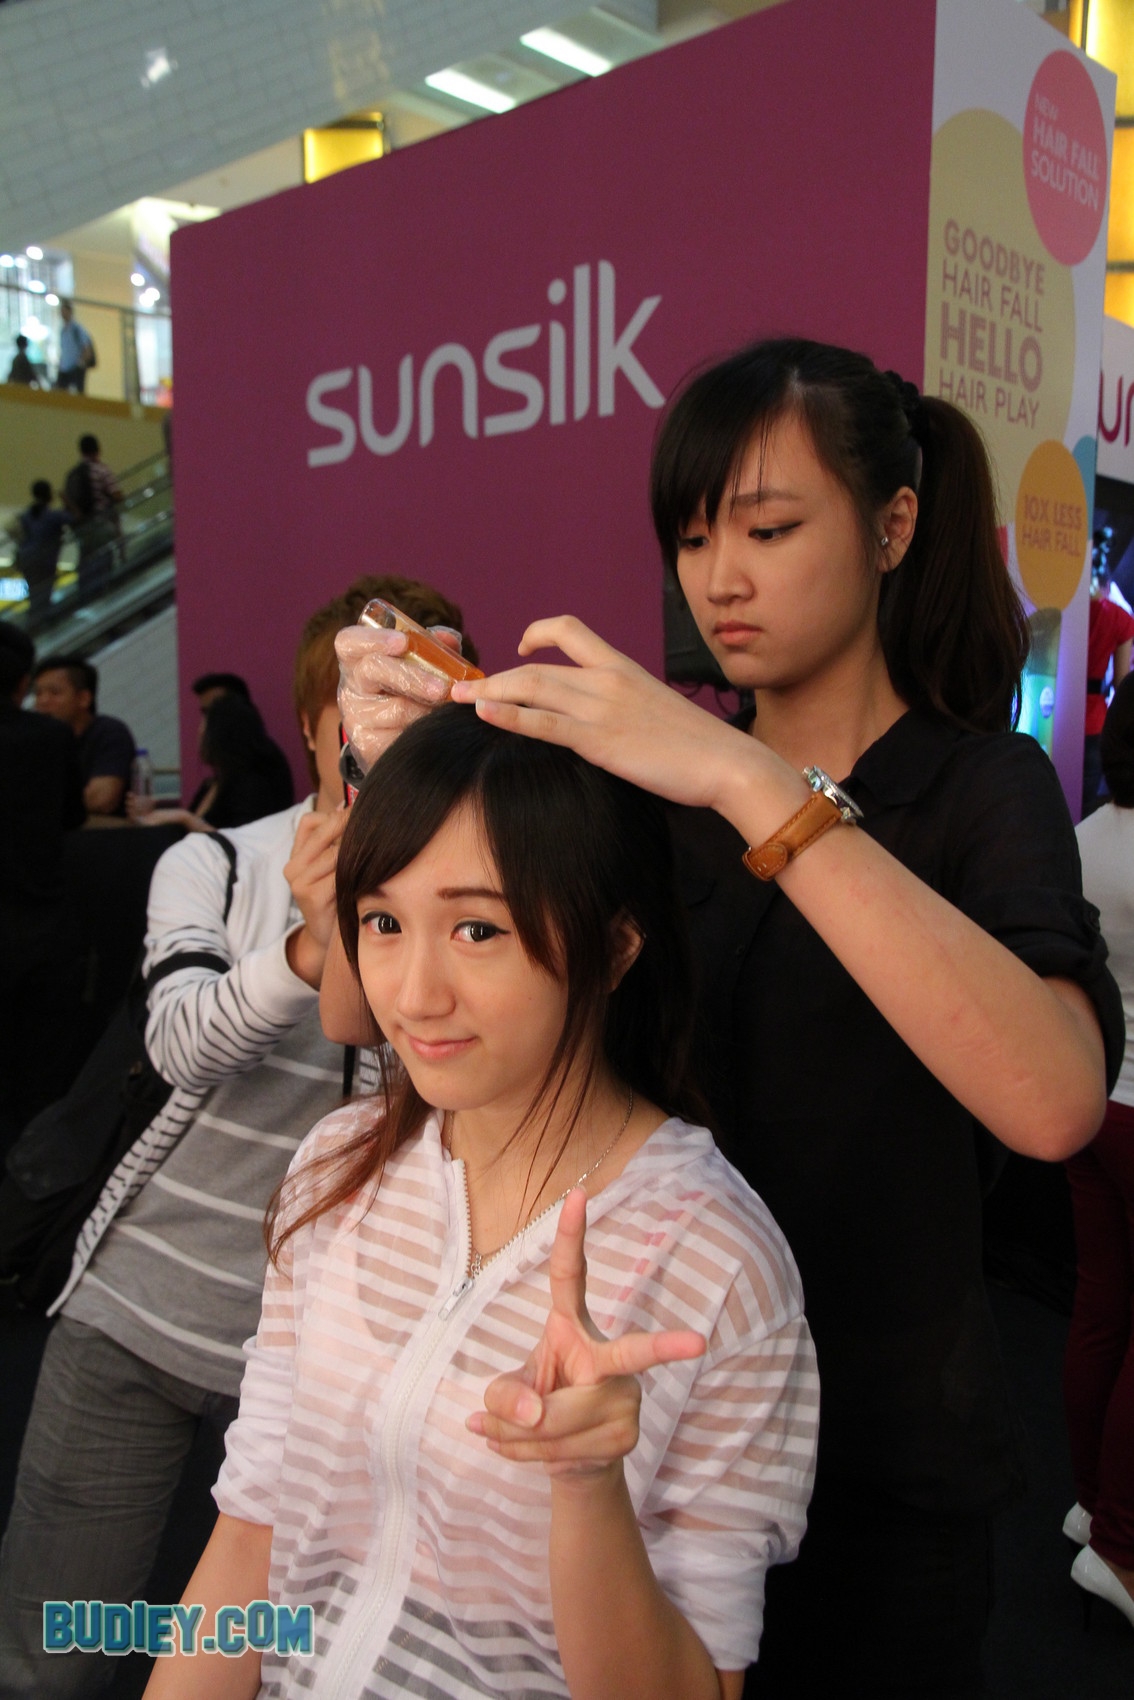 Sunsilk Lancar Sunsilk Hair Fall Solution Hair Tonic